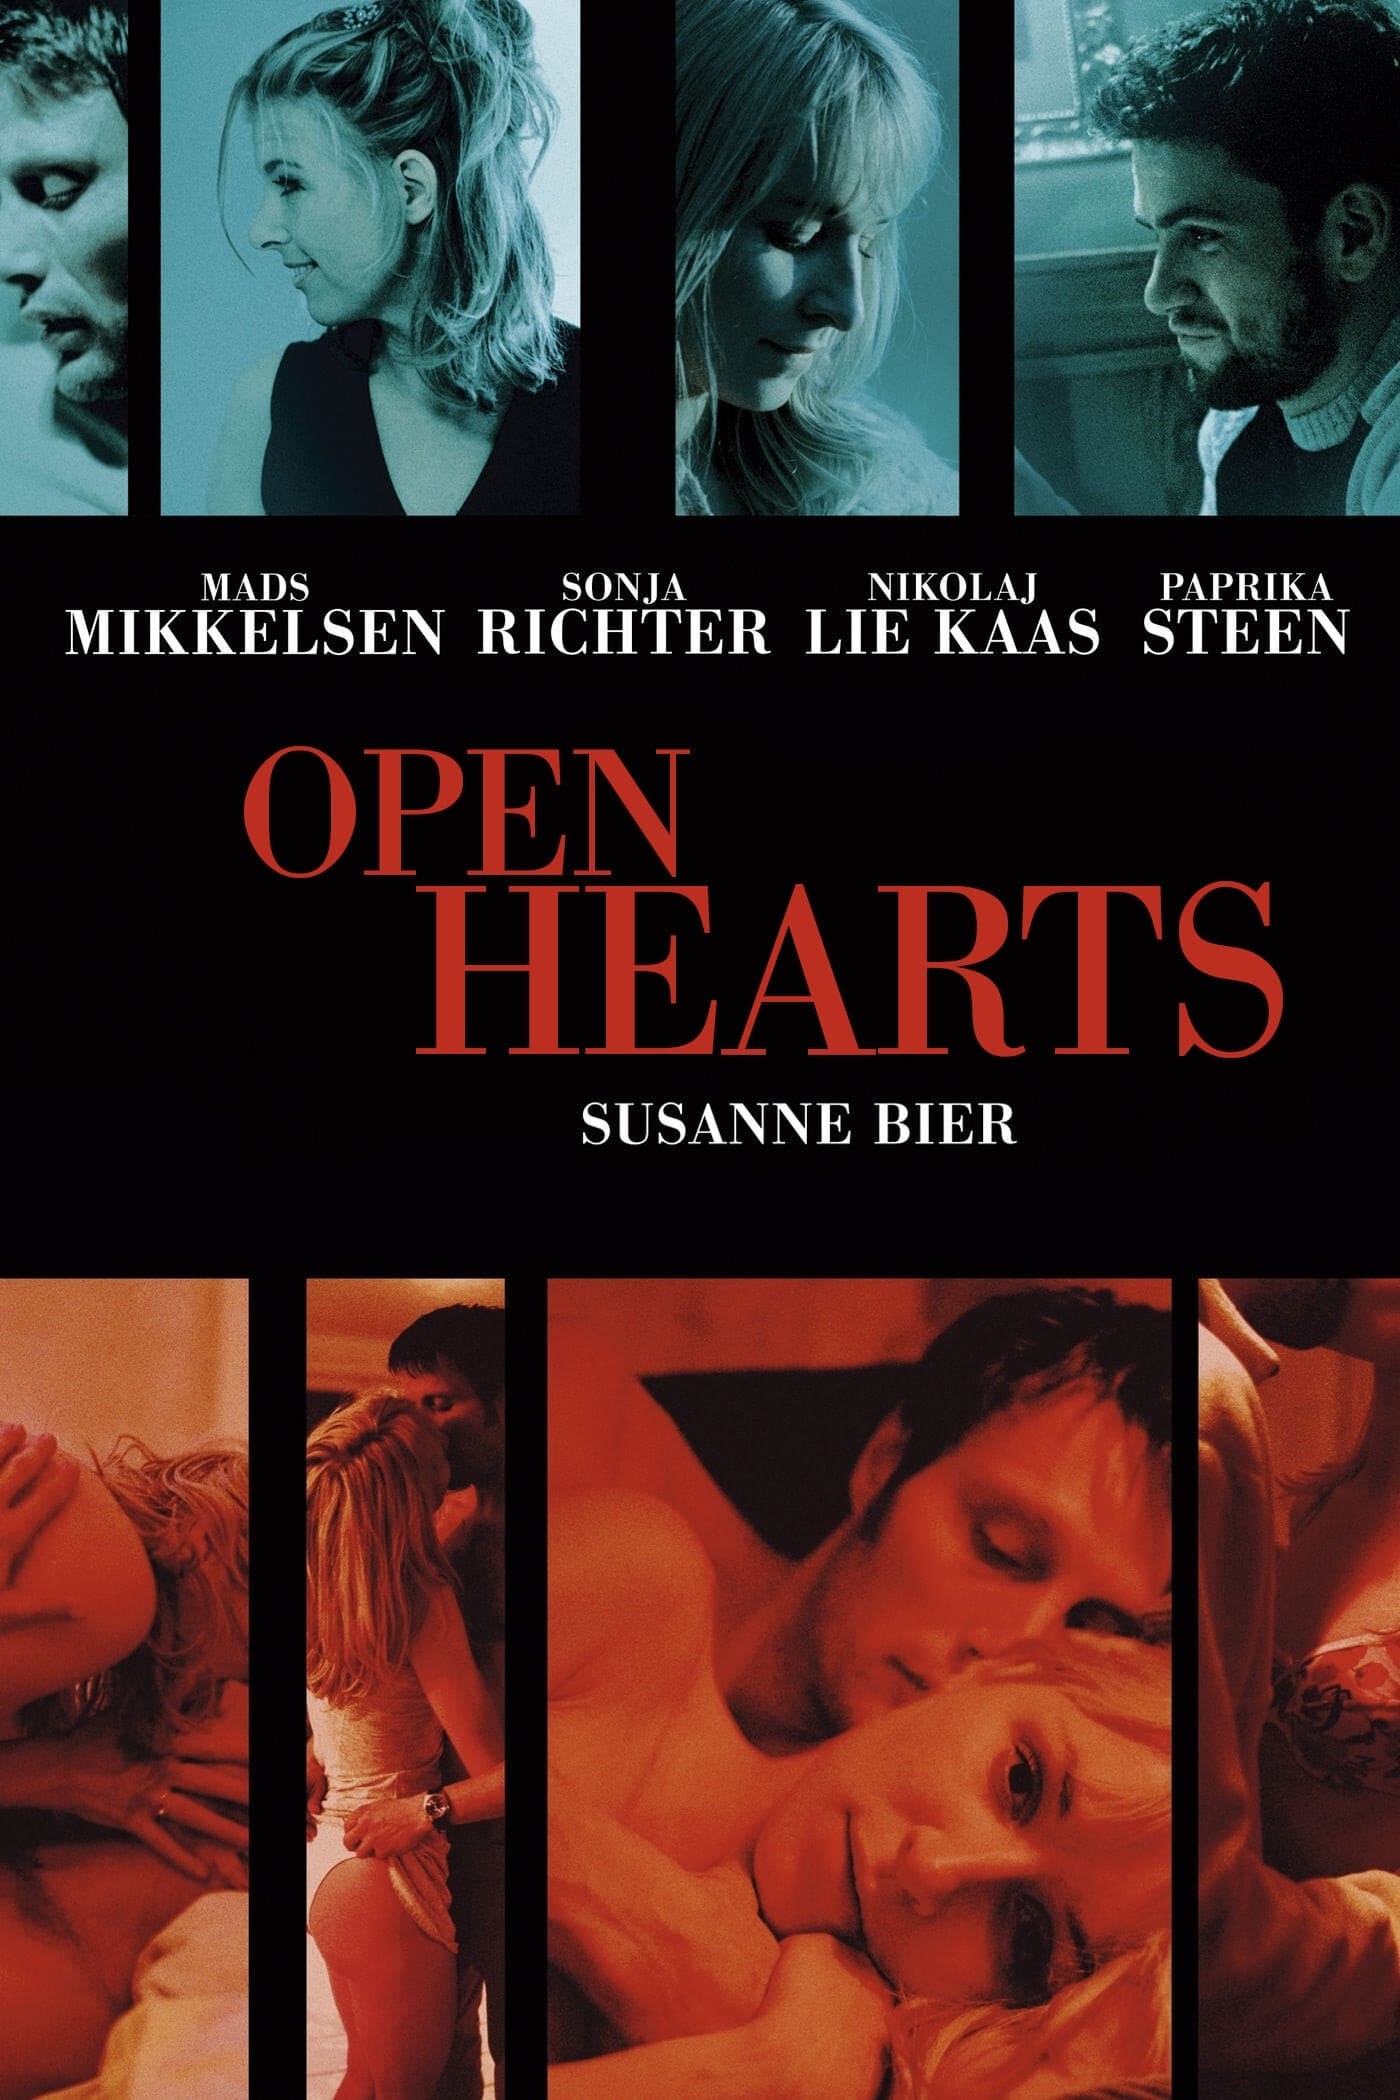 Open Hearts [Sub-ITA] (2002)